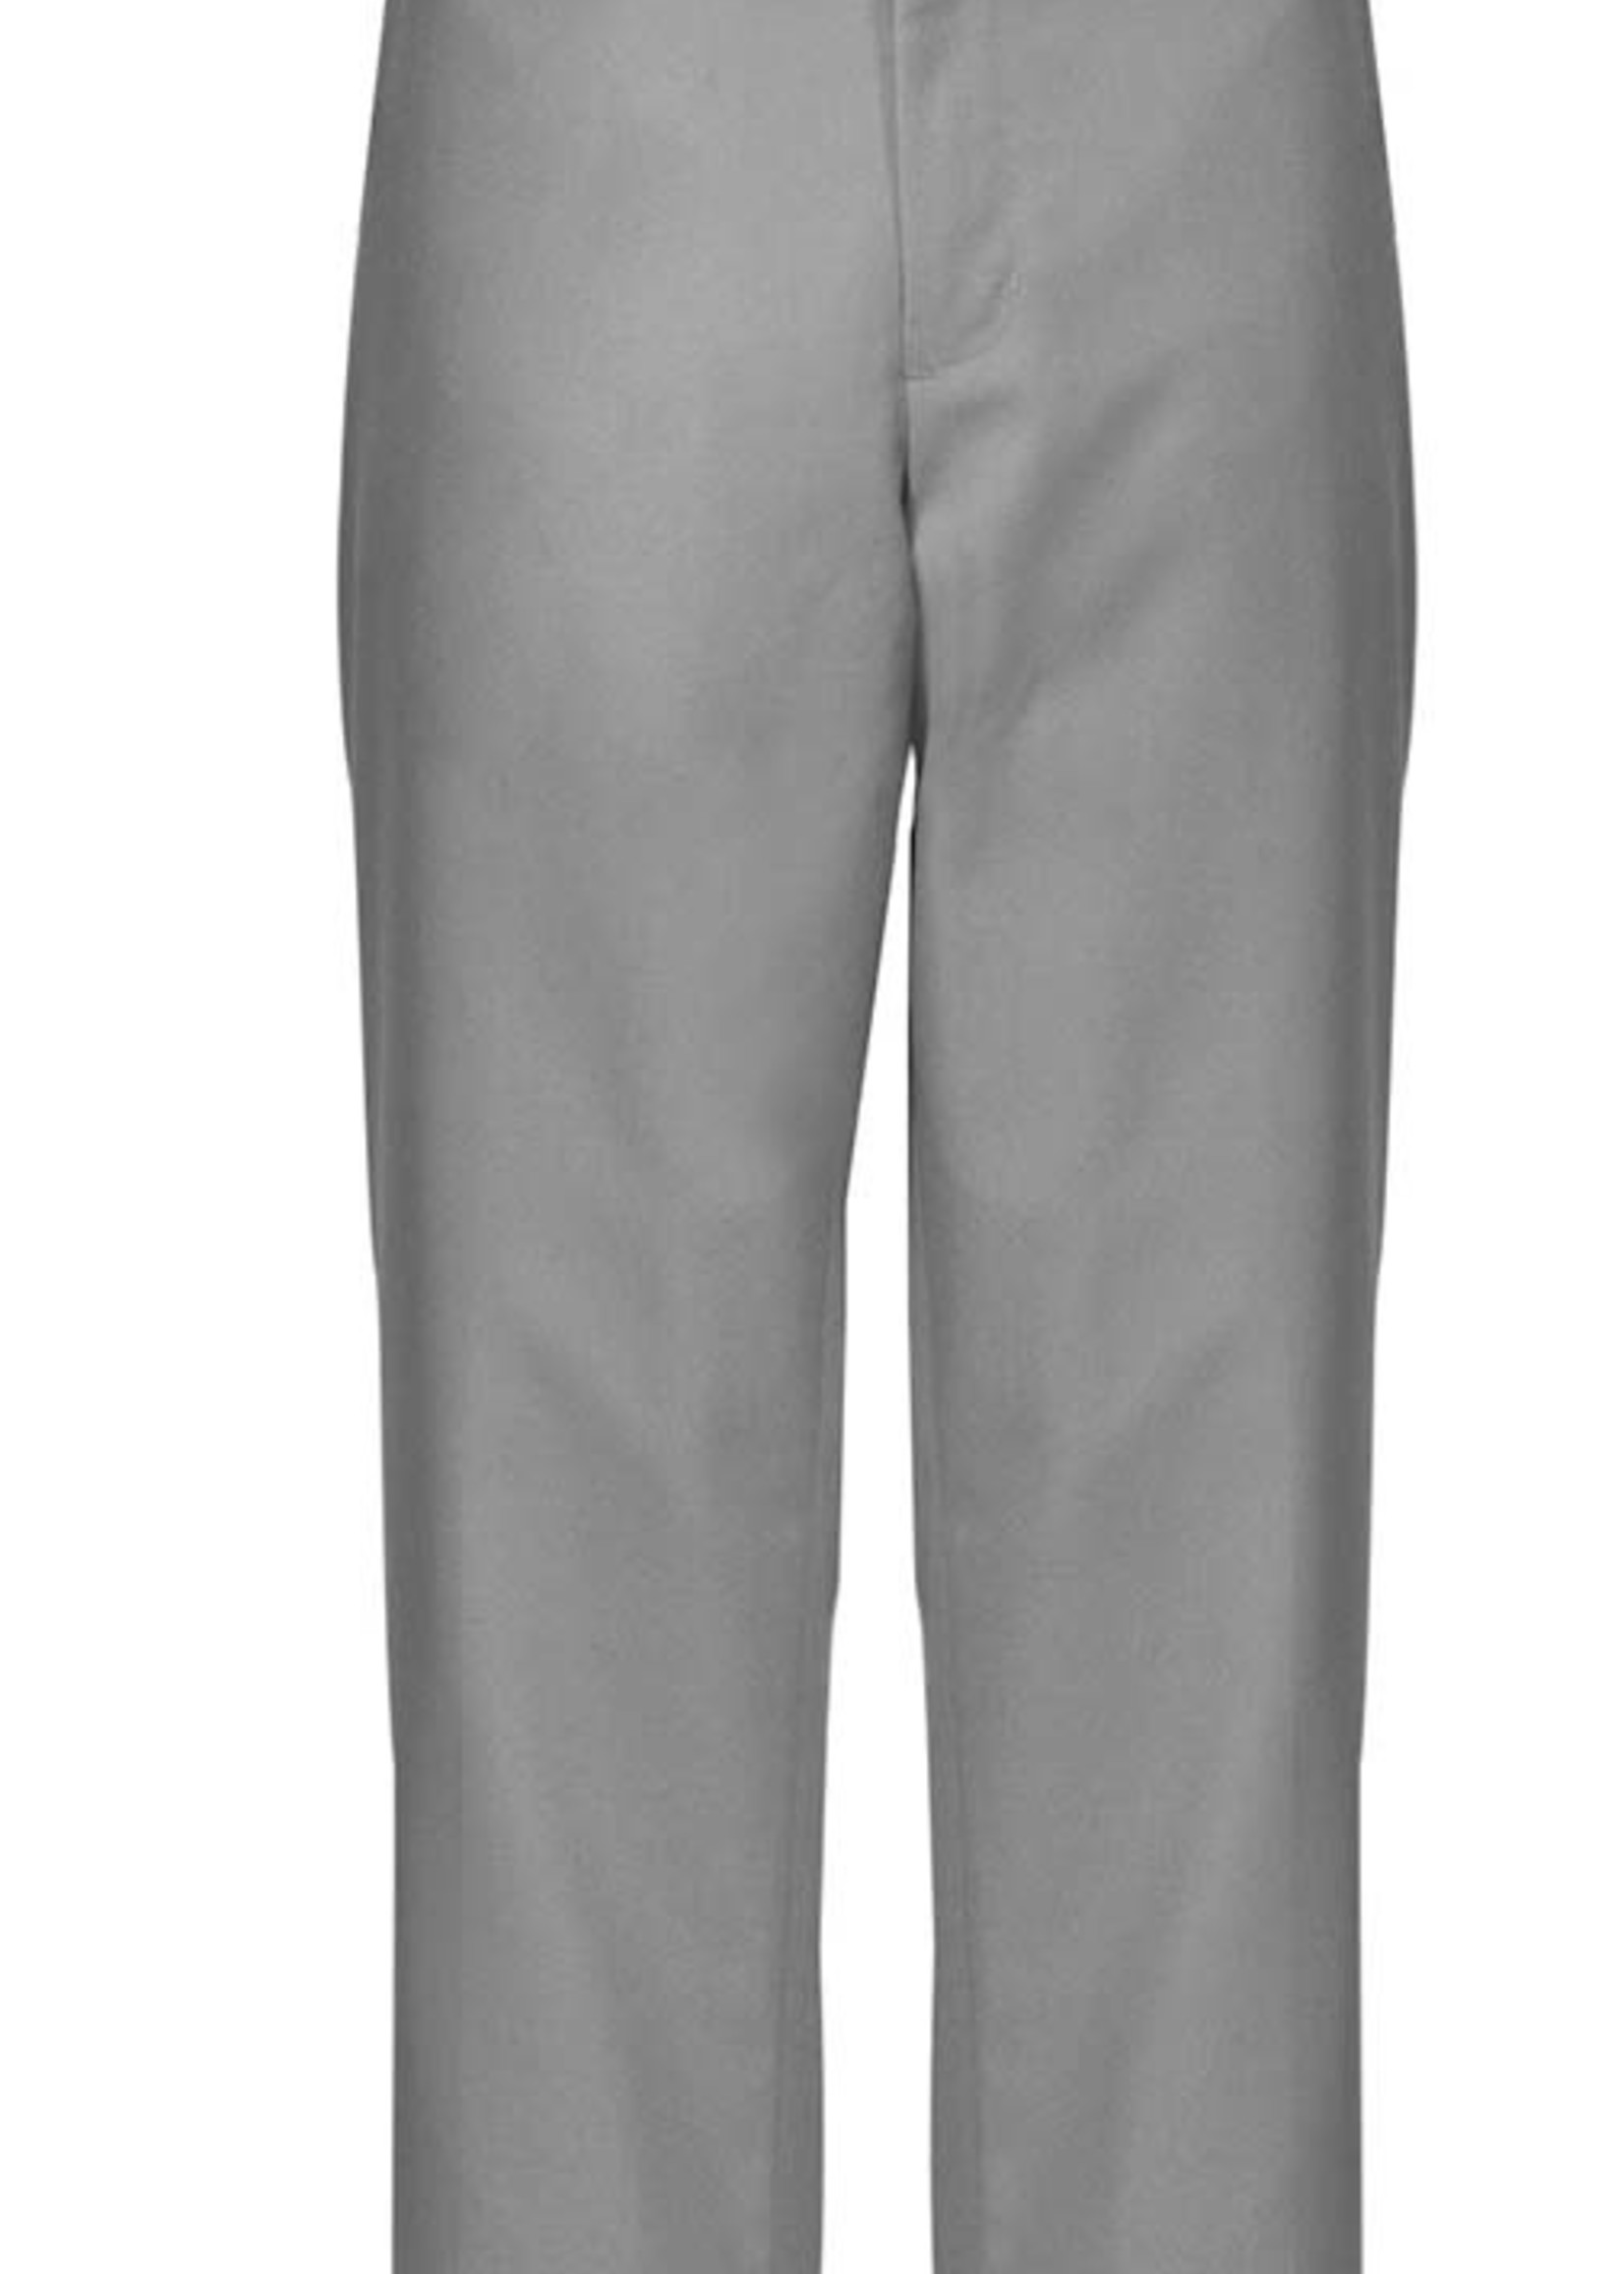 Boys Regular Grey School Trousers 2 Pack | Woolworths.co.za